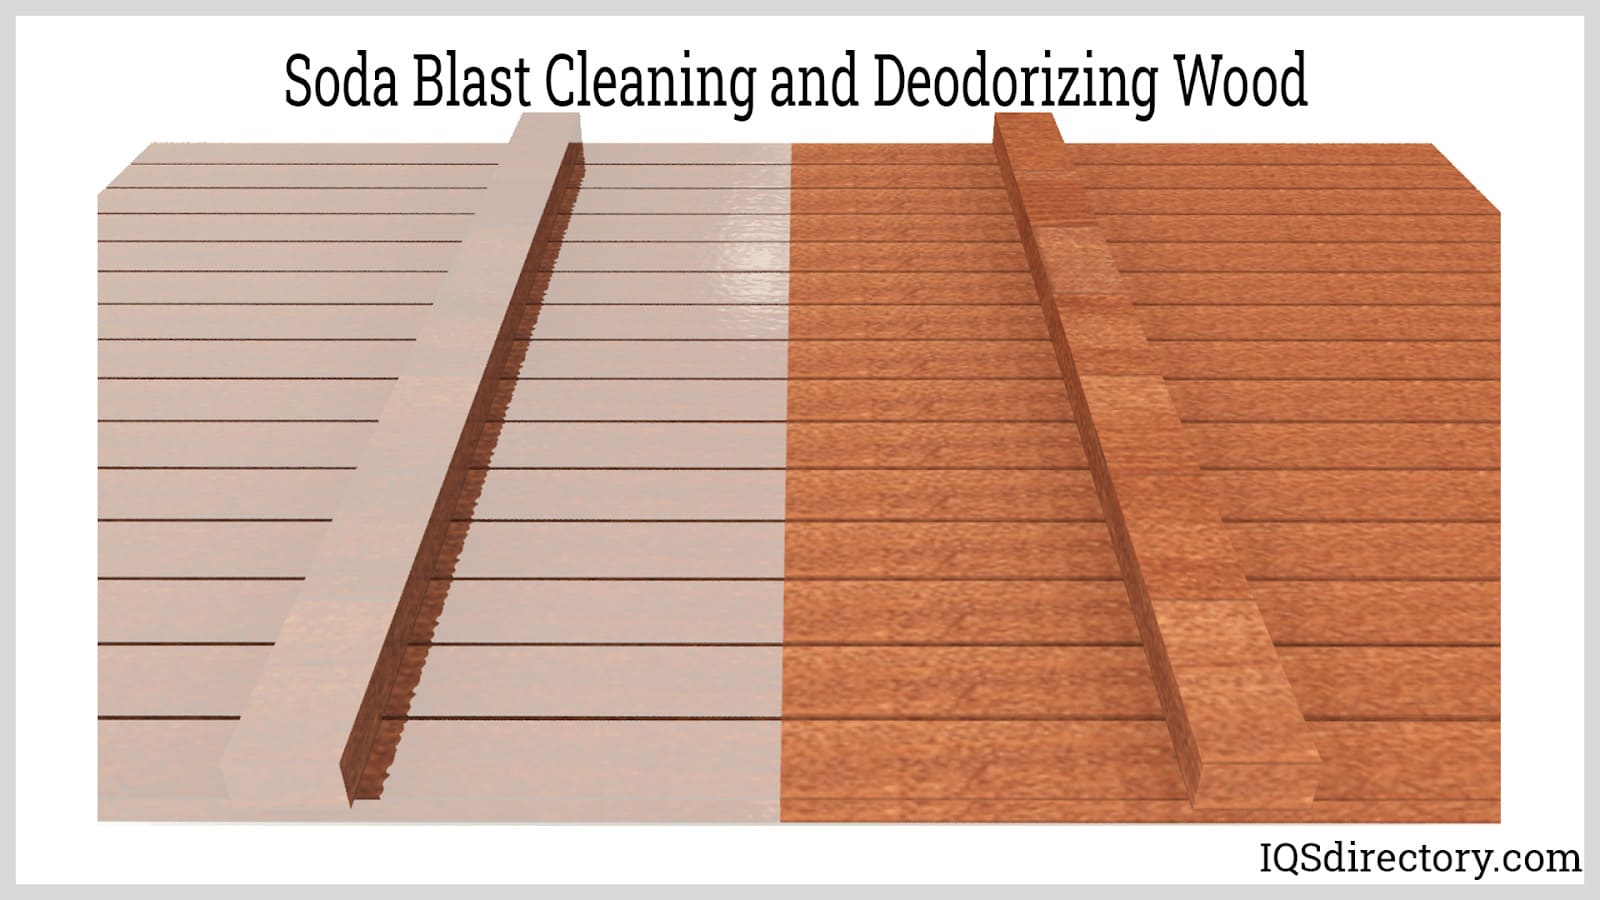 Soda Blast Cleaning and Deodorizing Wood